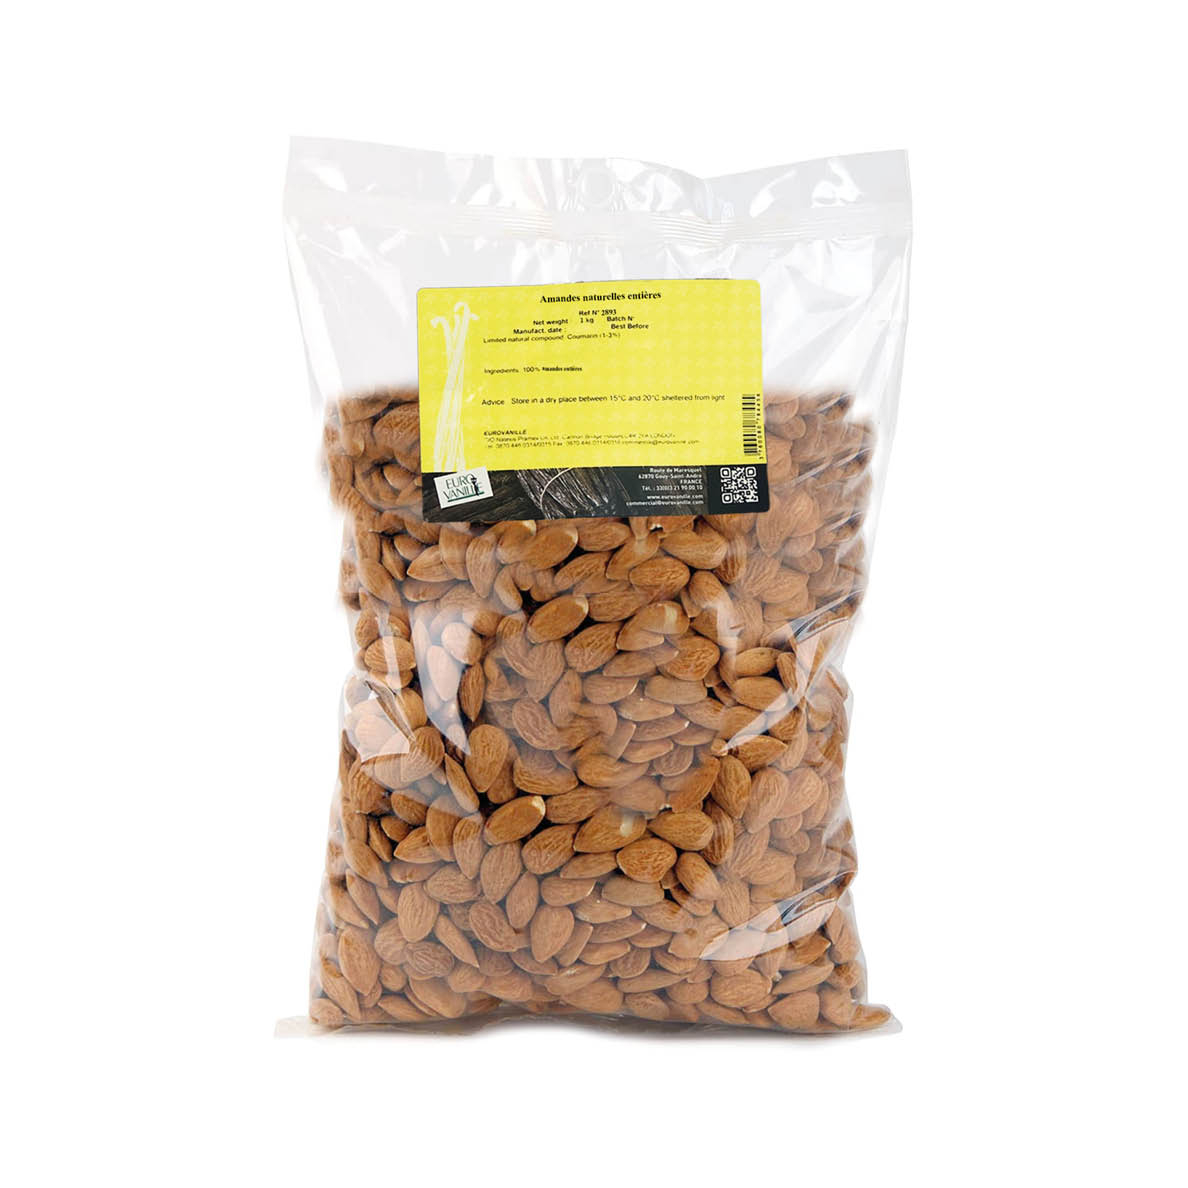 Whole natural almonds - 1 kg